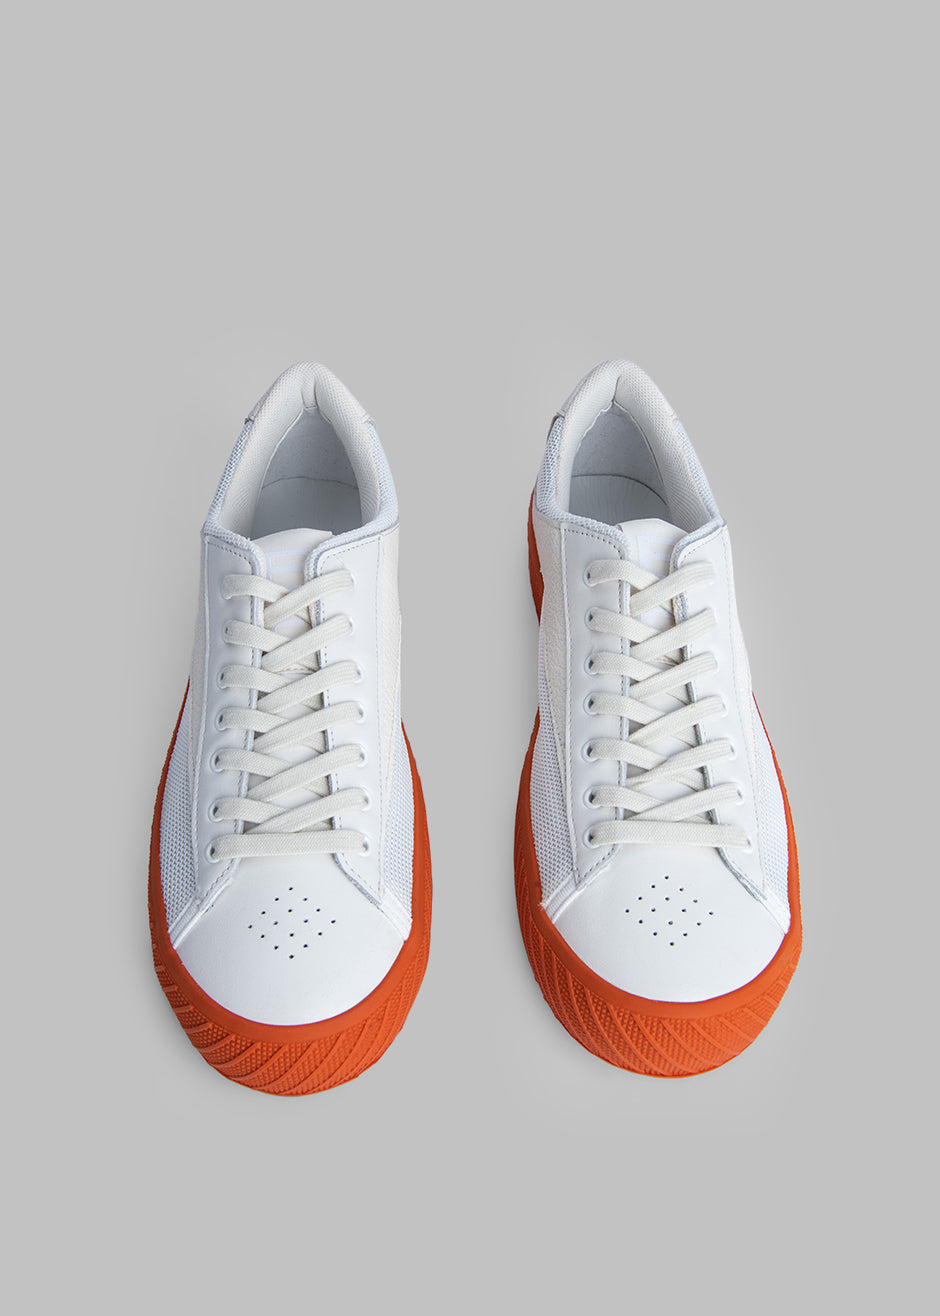 BY FAR Rodina Sneakers - Tangerine On White - 5